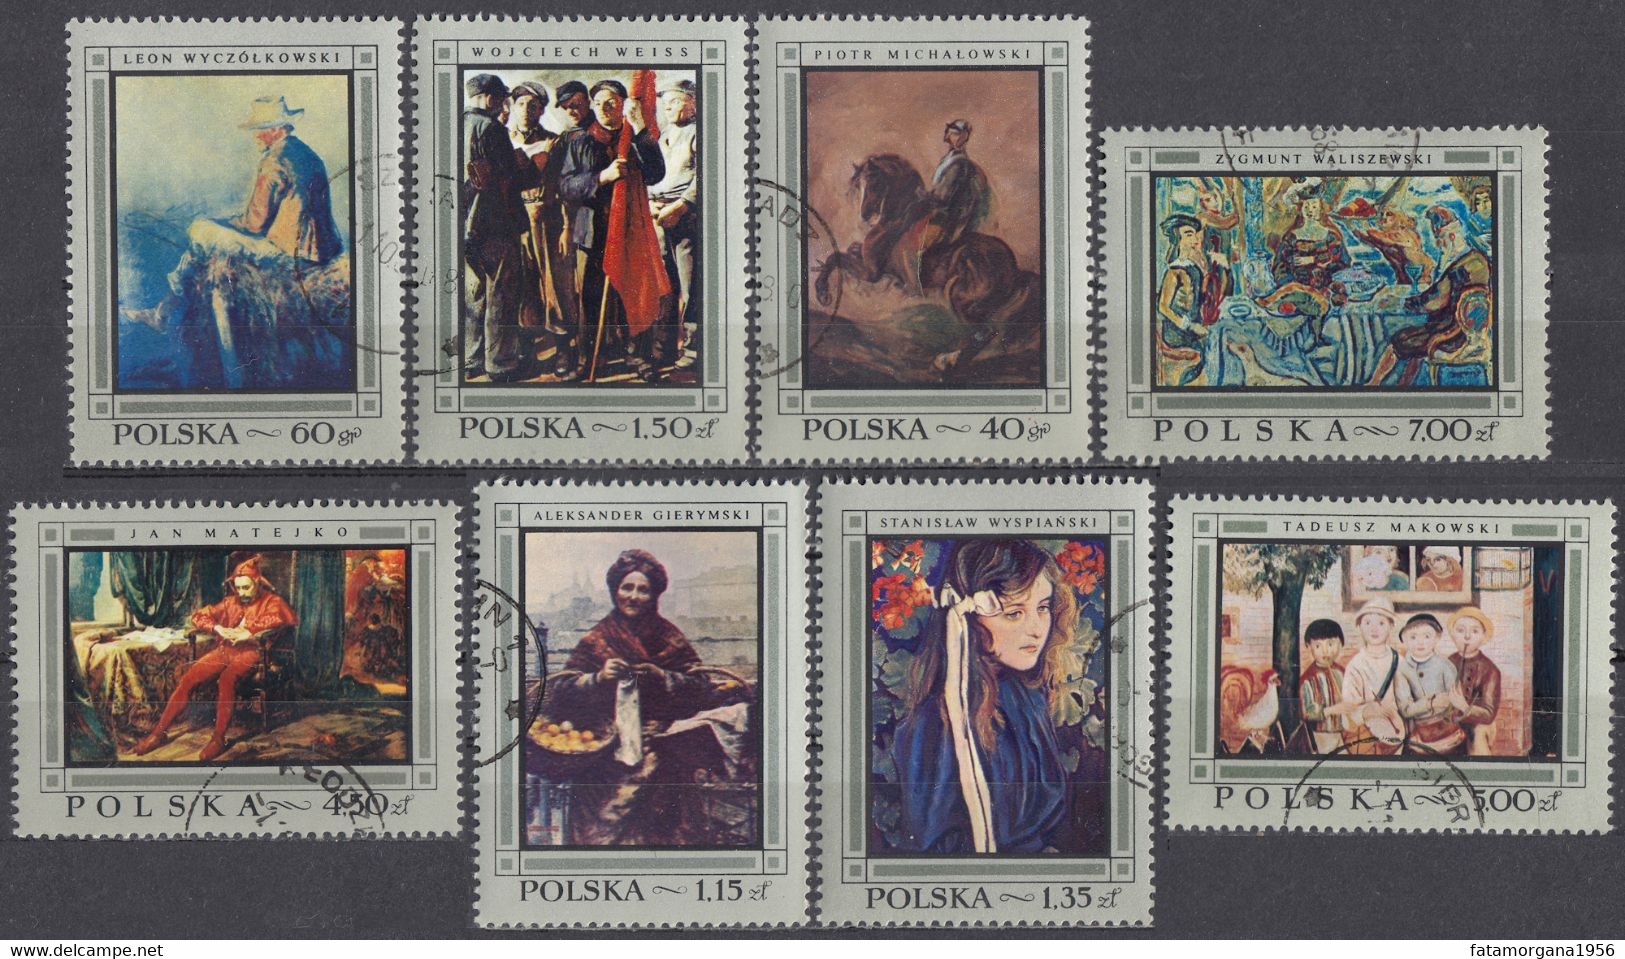 POLSKA - 1968 - Serie Completa Usata: Yvert 1714/1721, 8 Valori, Come Da Immagine. - Usados